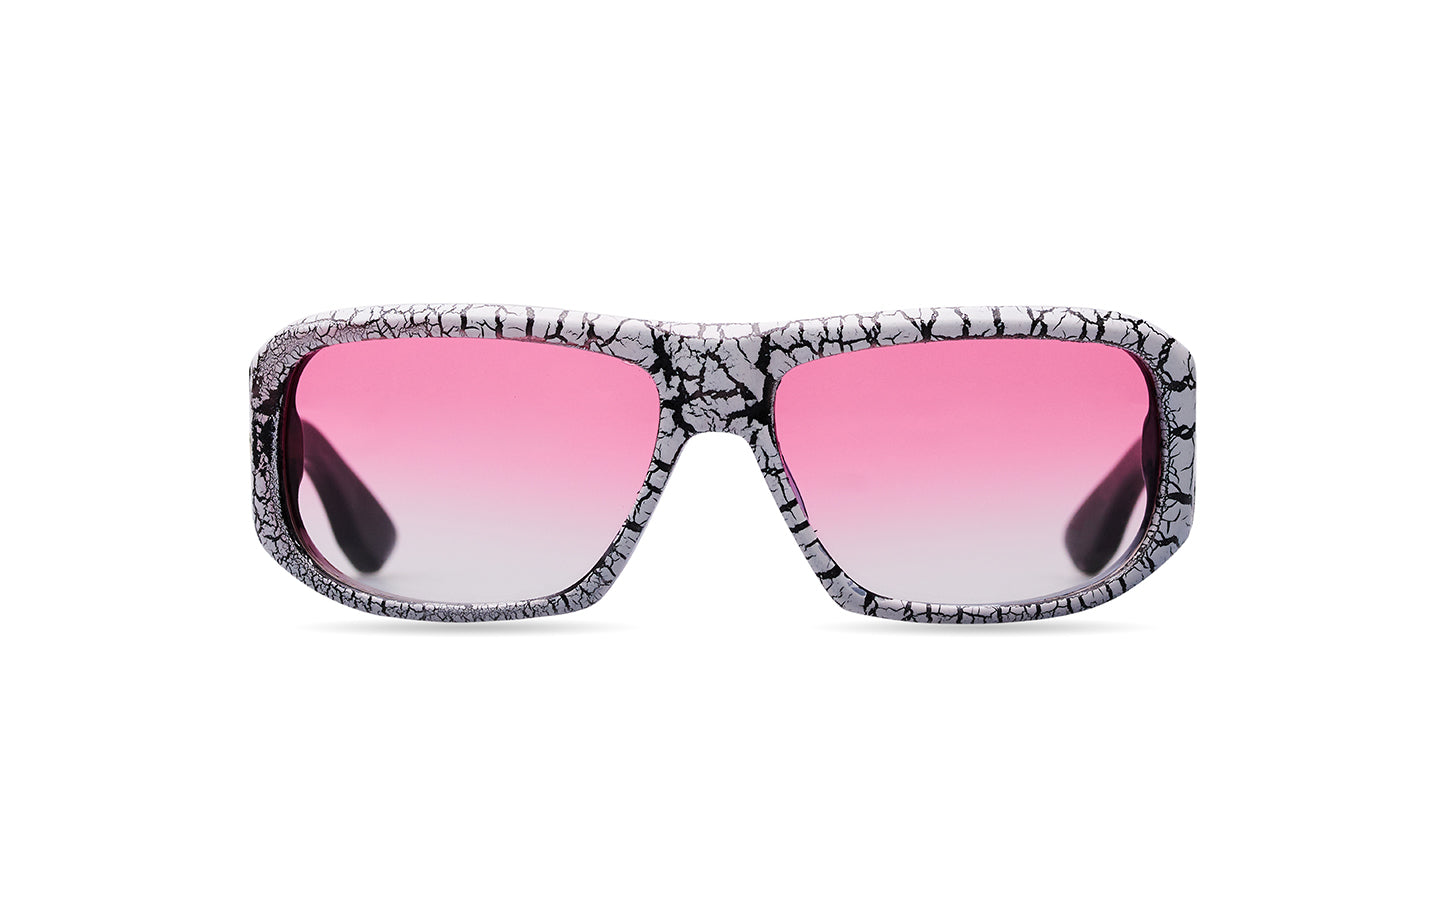 Who Decides War x DITA SUPERFLIGHT Sunglasses Collab, Interview